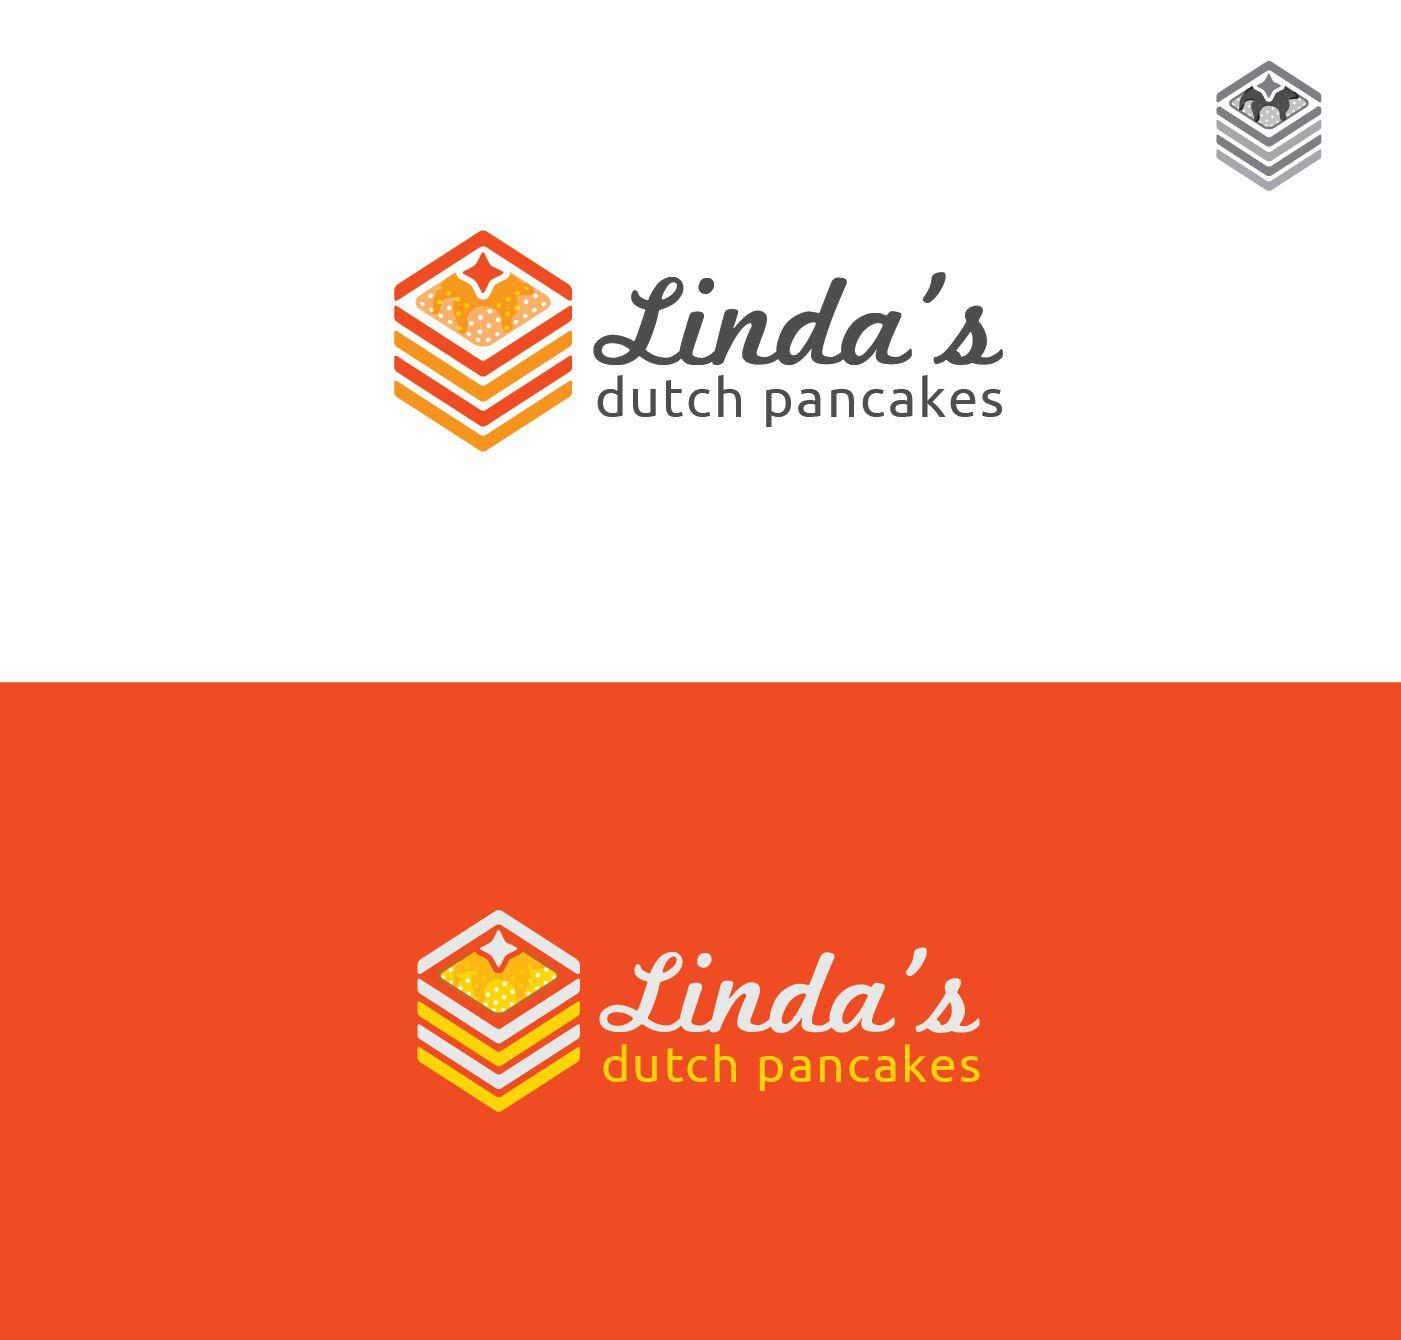 Red and Orange Restaurant Logo - Playful, Personable, Restaurant Logo Design for Linda's Dutch ...